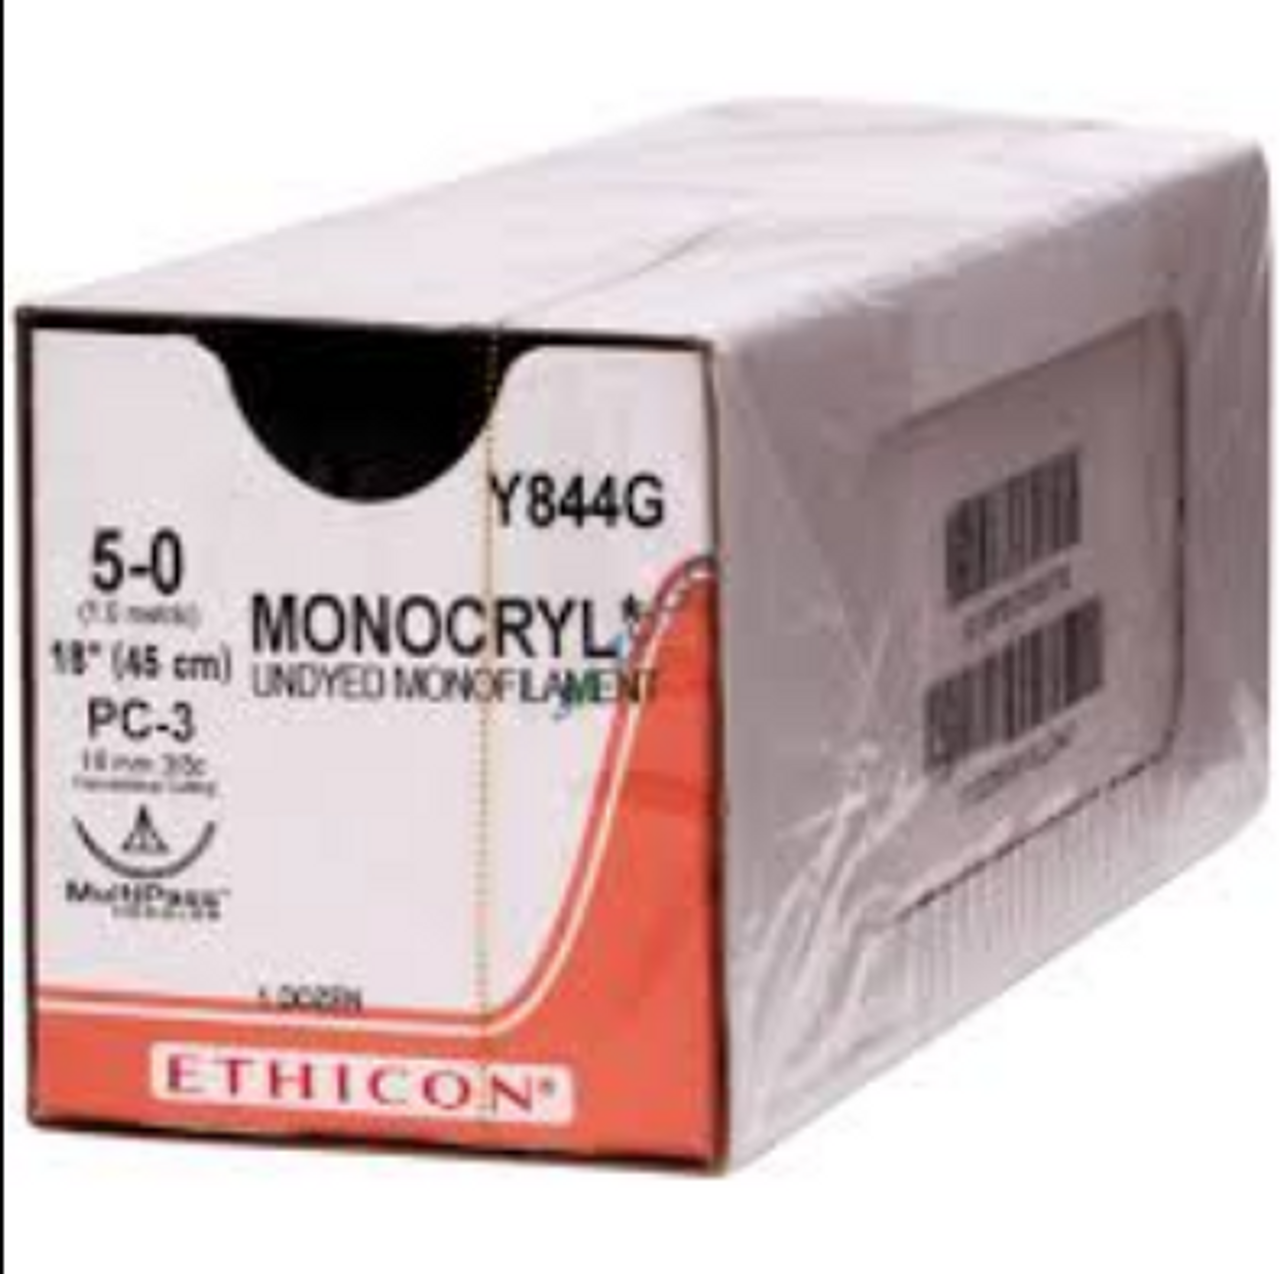 Ethicon-Y844G SUTURE MONOCRYL MONO UNDYE 5-0 18in PC-3 BX/12